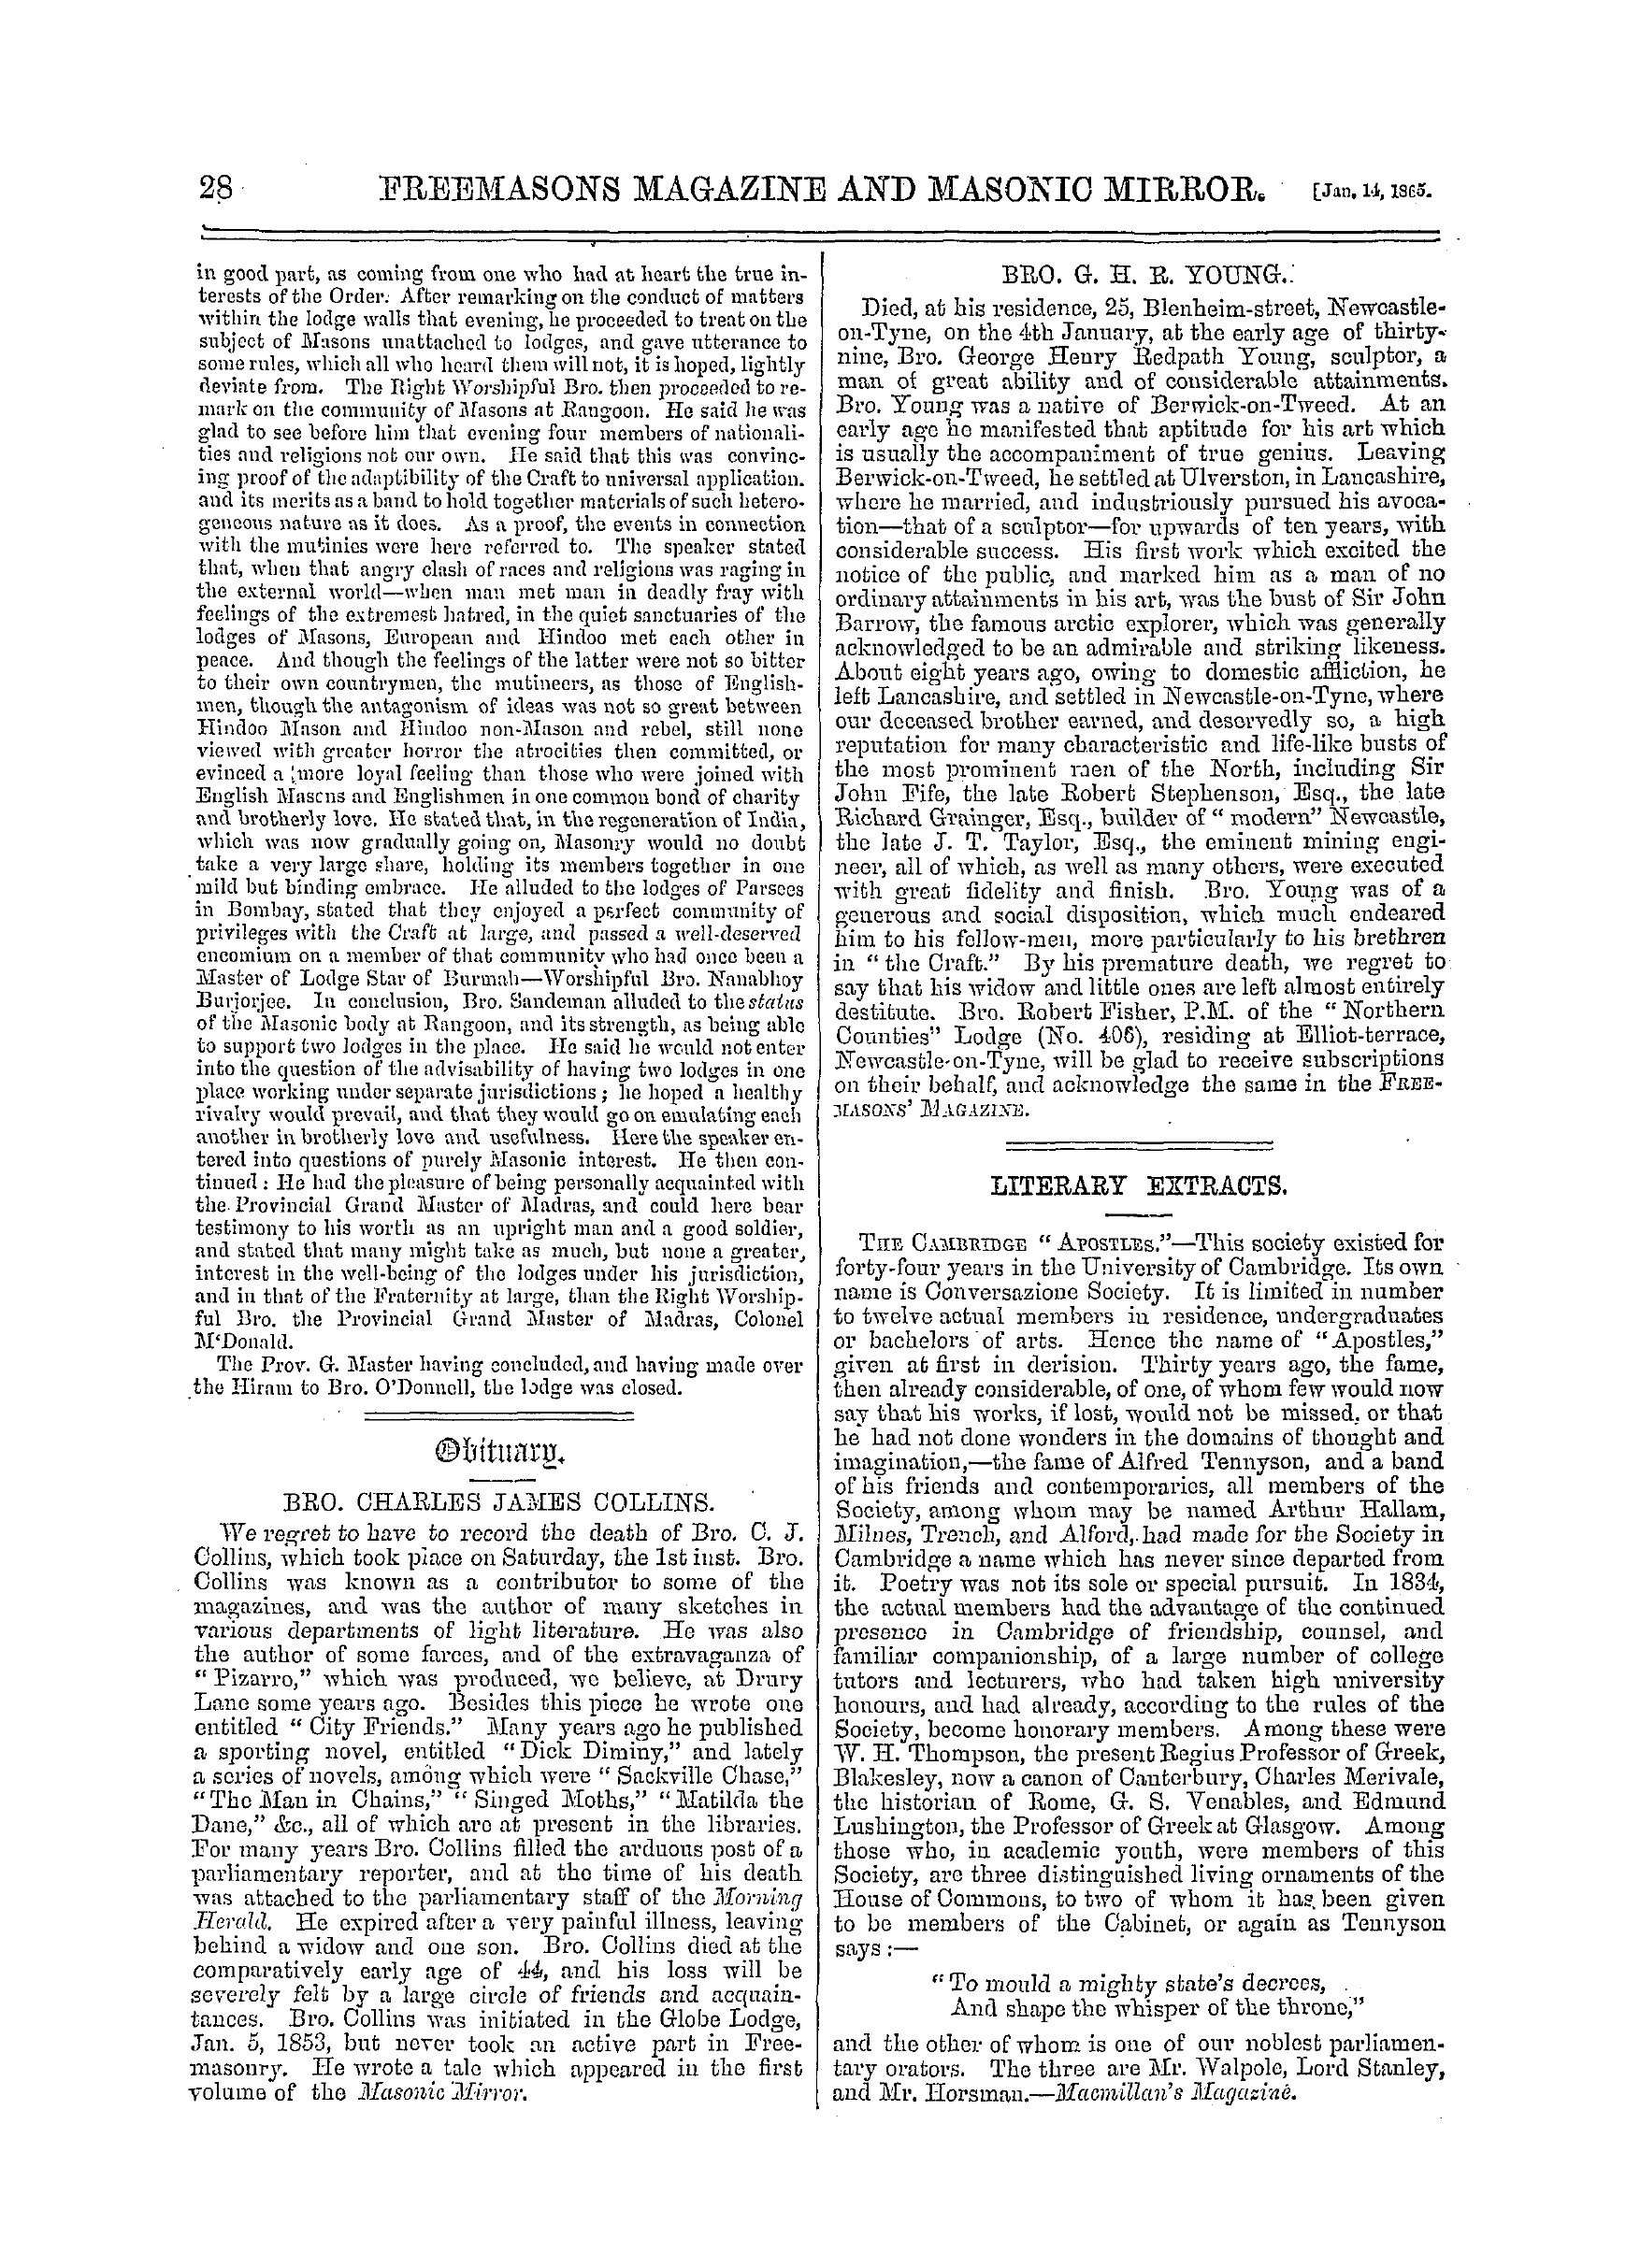 The Freemasons' Monthly Magazine: 1865-01-14 - Literary Extracts.